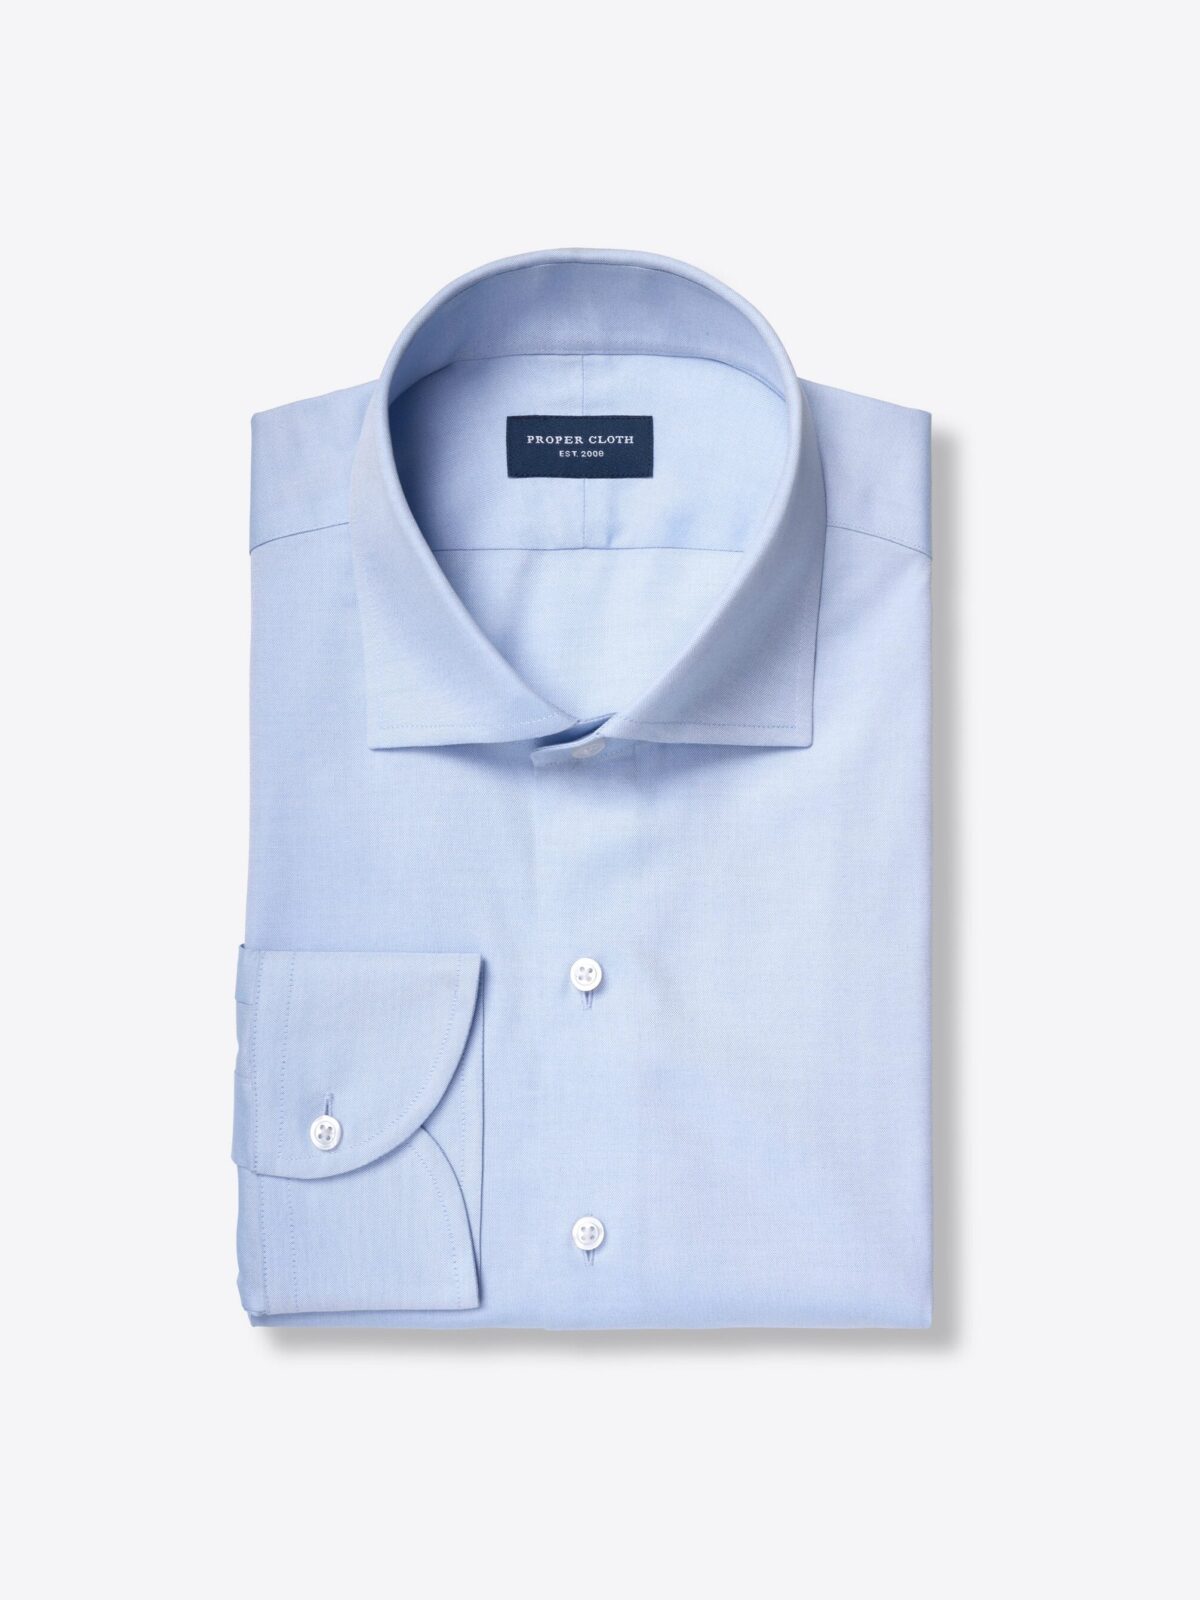 Pinpoint Solid White Non-iron Dress Shirt, Cotton Shirts